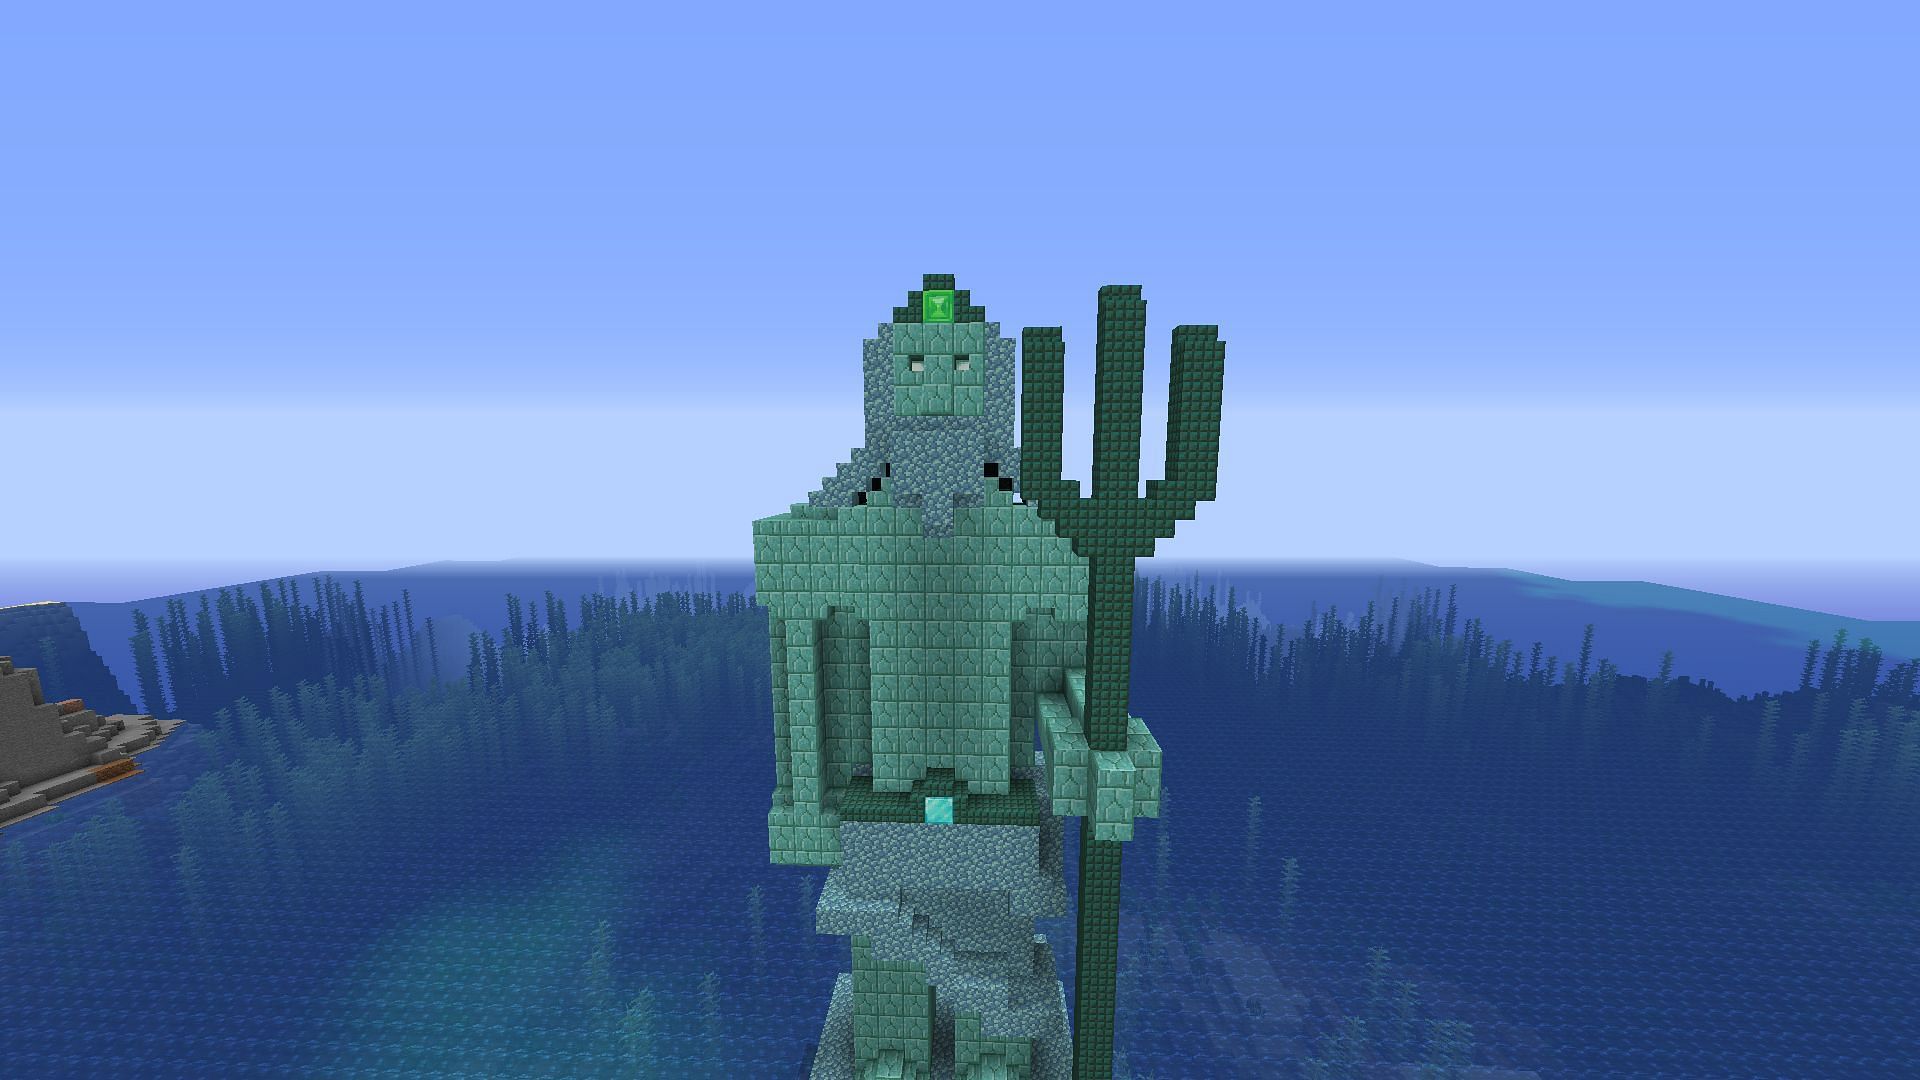 A statue of Poseidon in Minecraft (Image via u/I_Am_Not_Snowden on Reddit)